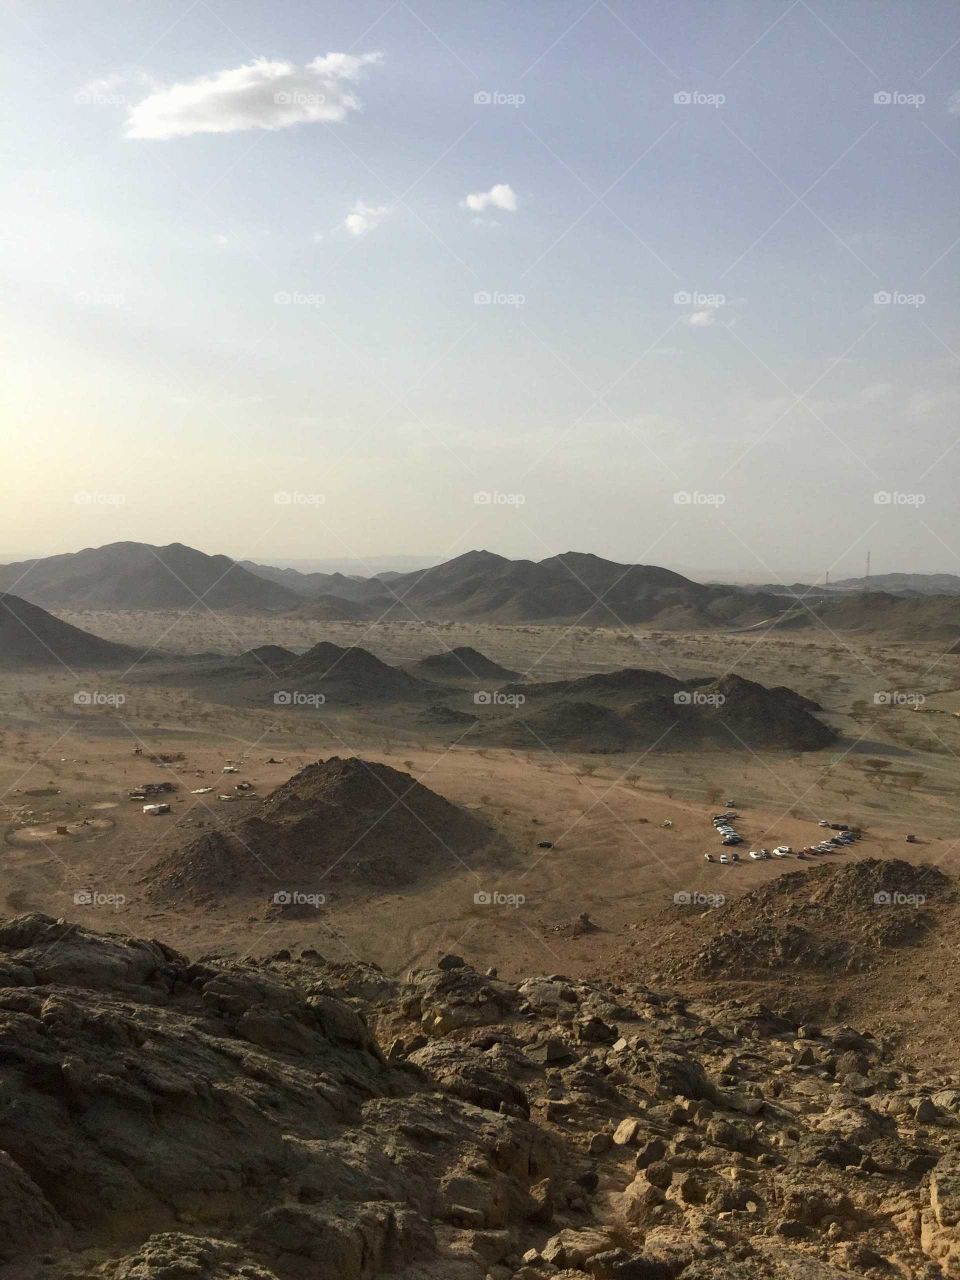 Desert view distant mountaind Saudi Arabia